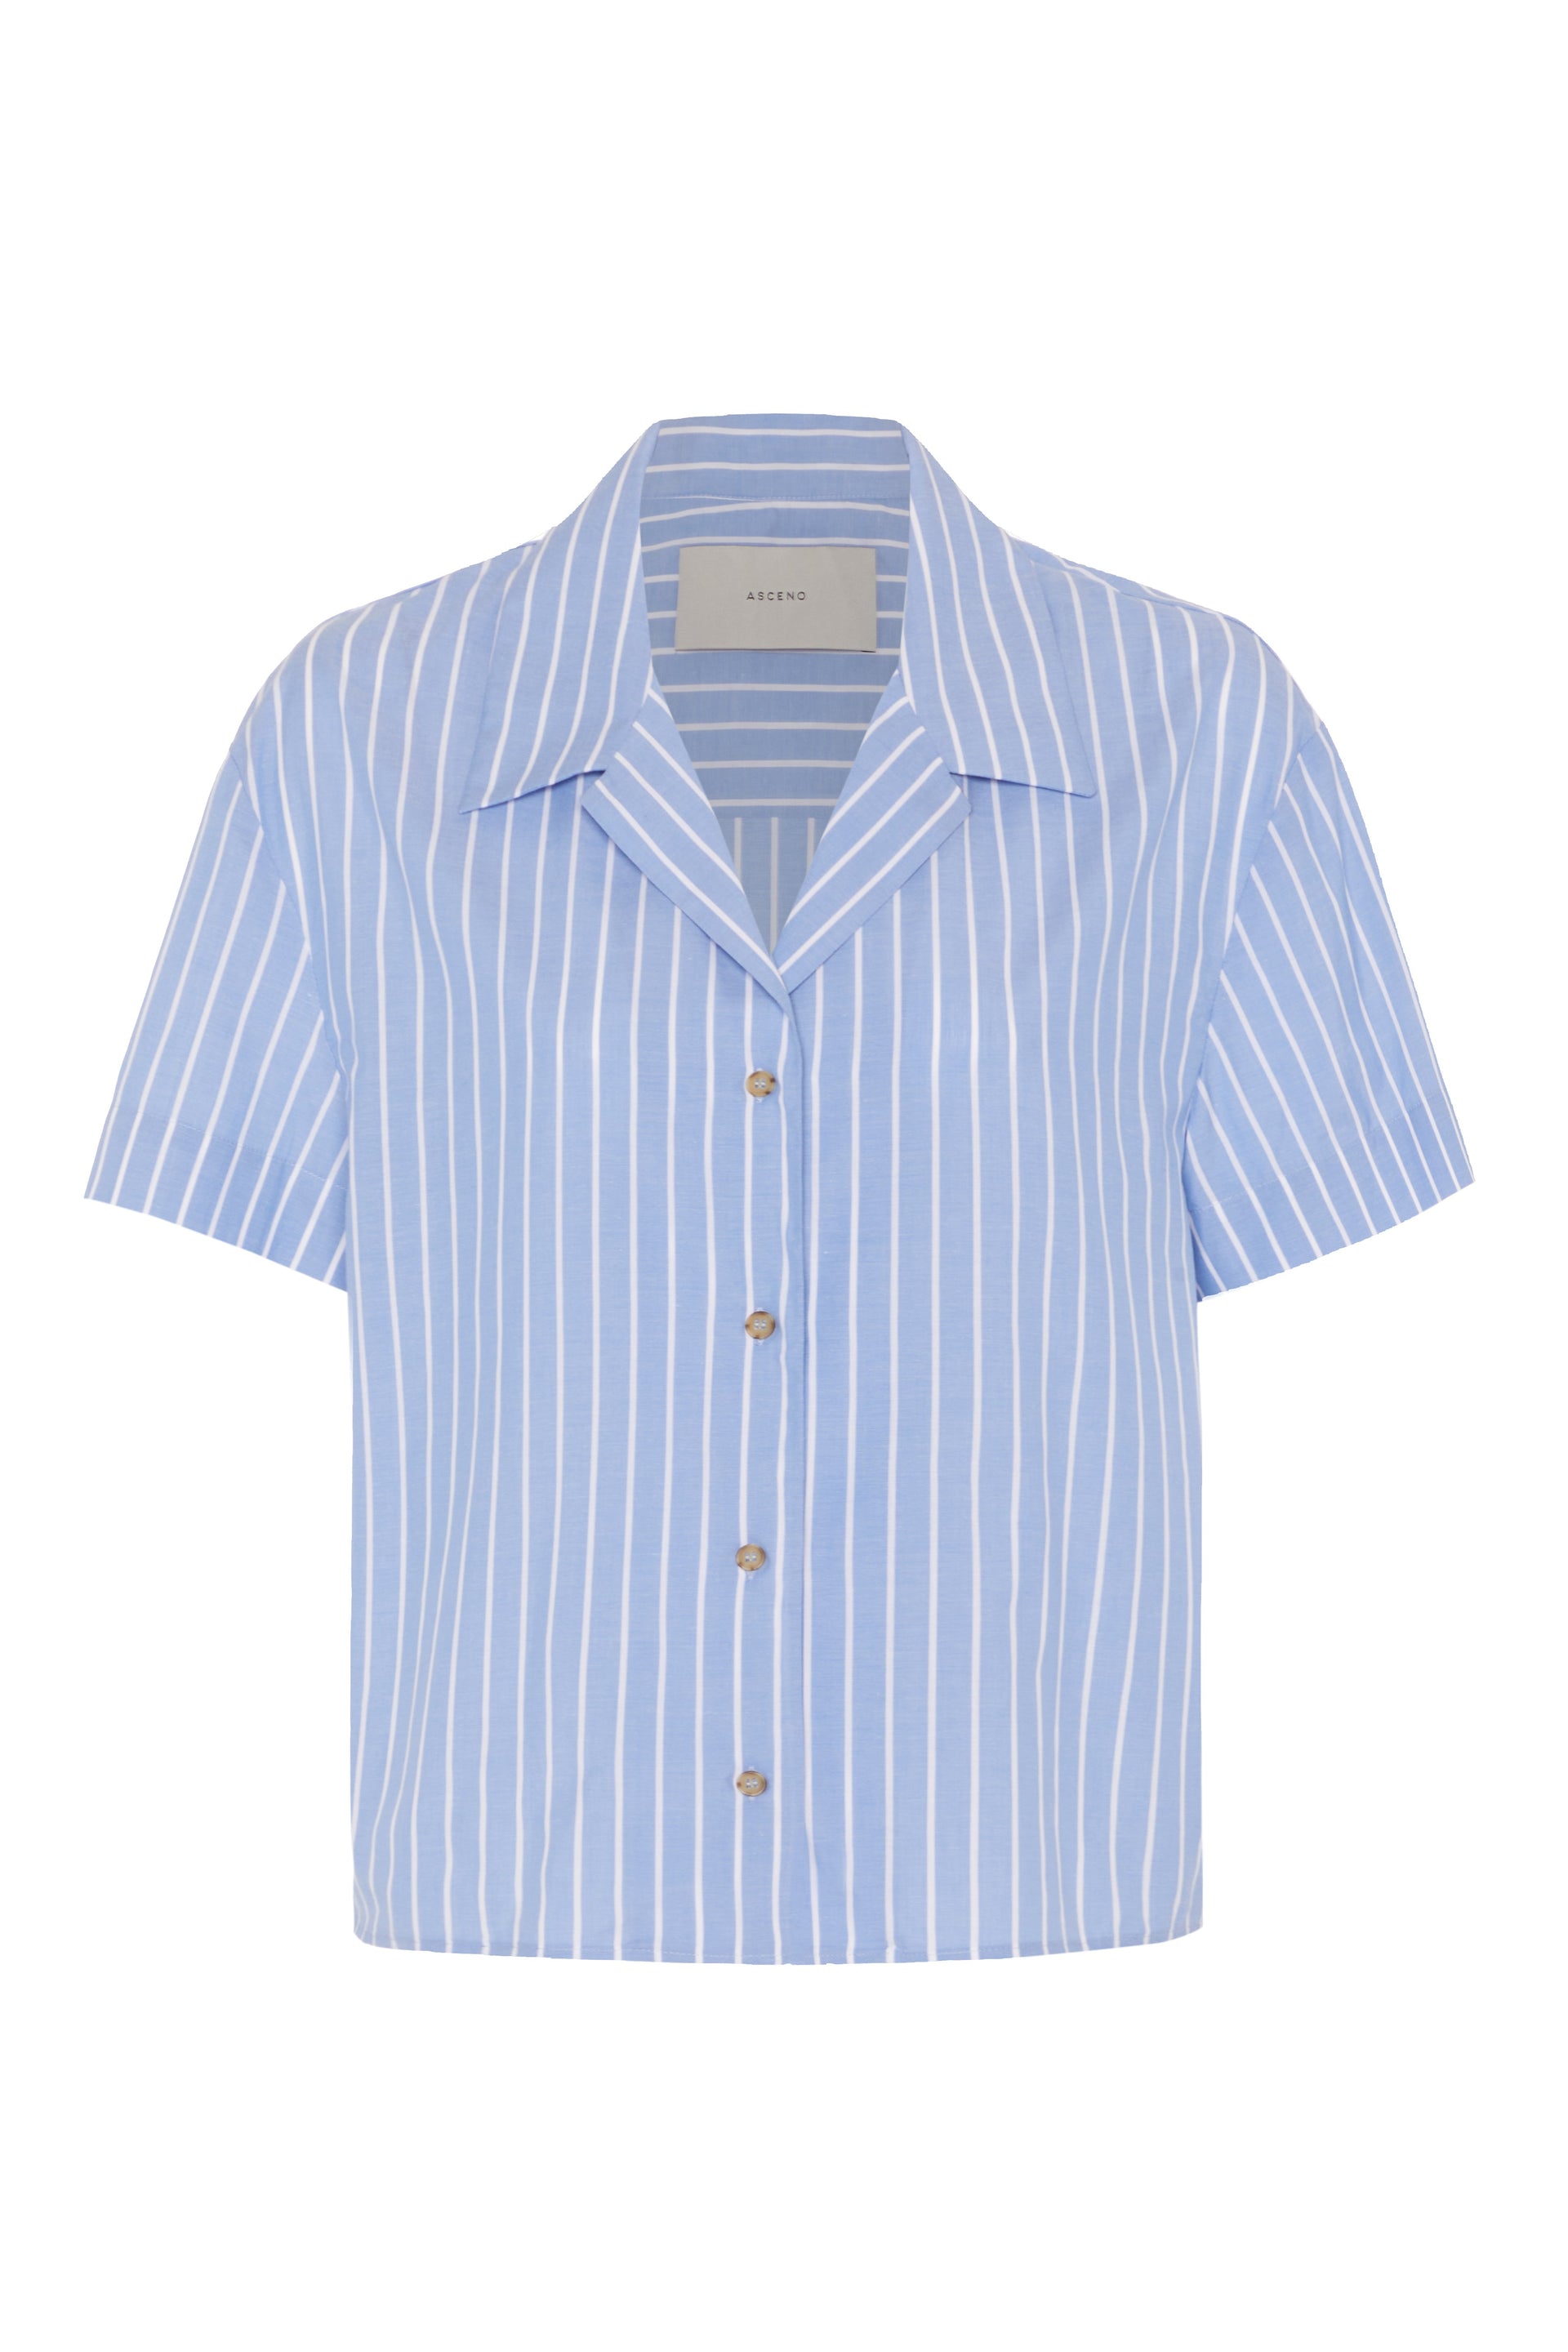 Prague Shirt Blue & White Stripe Cotton Silk